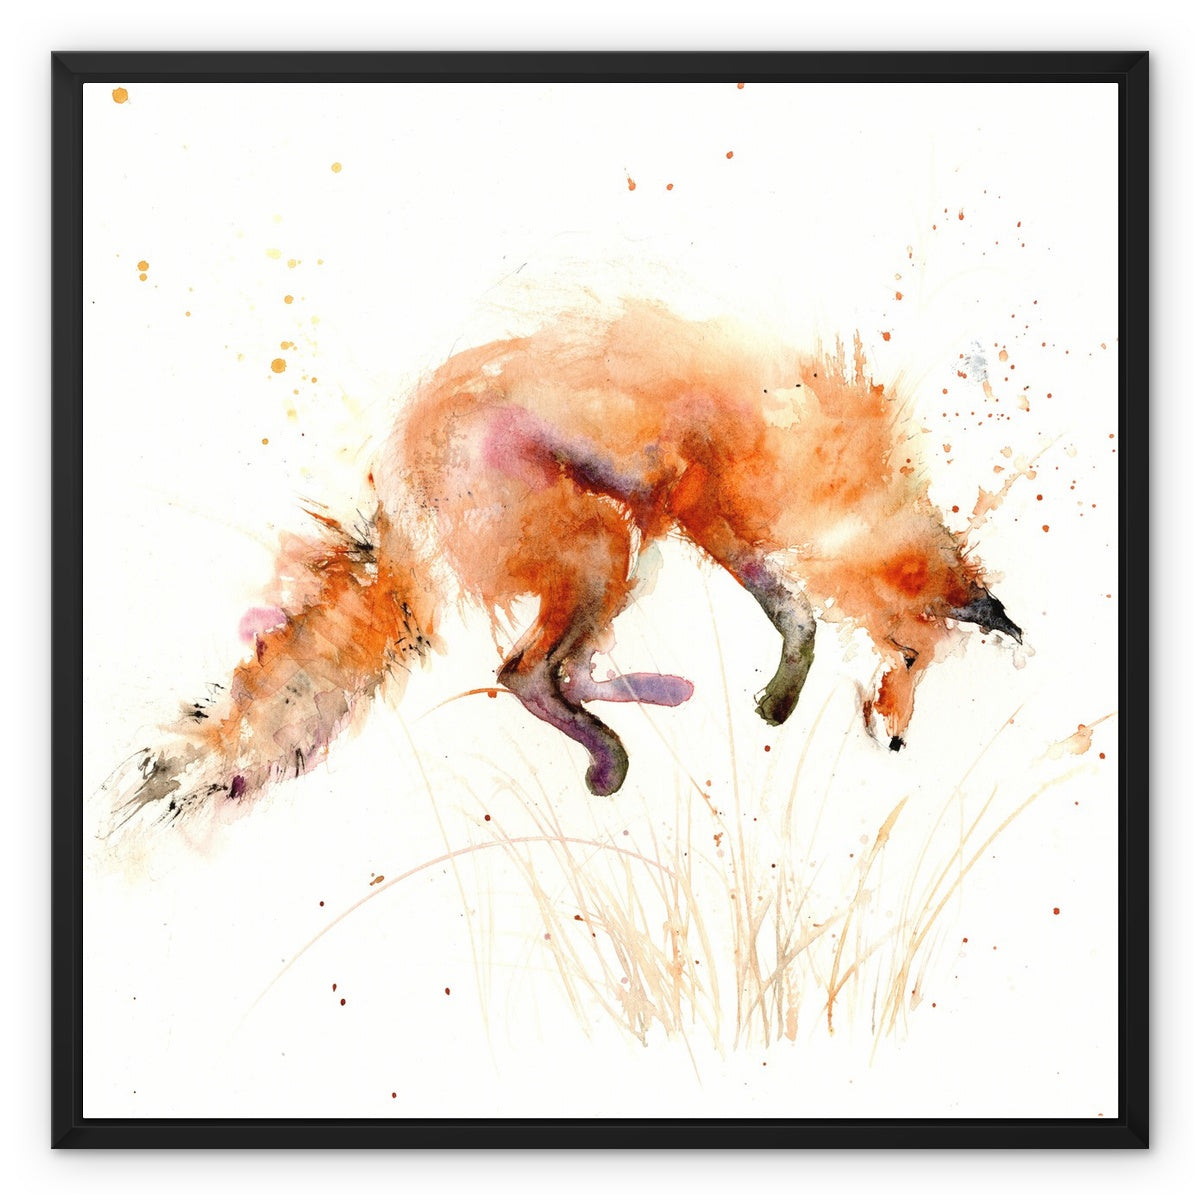 Leaping fox Framed Canvas - Jen Buckley Art limited edition animal art prints